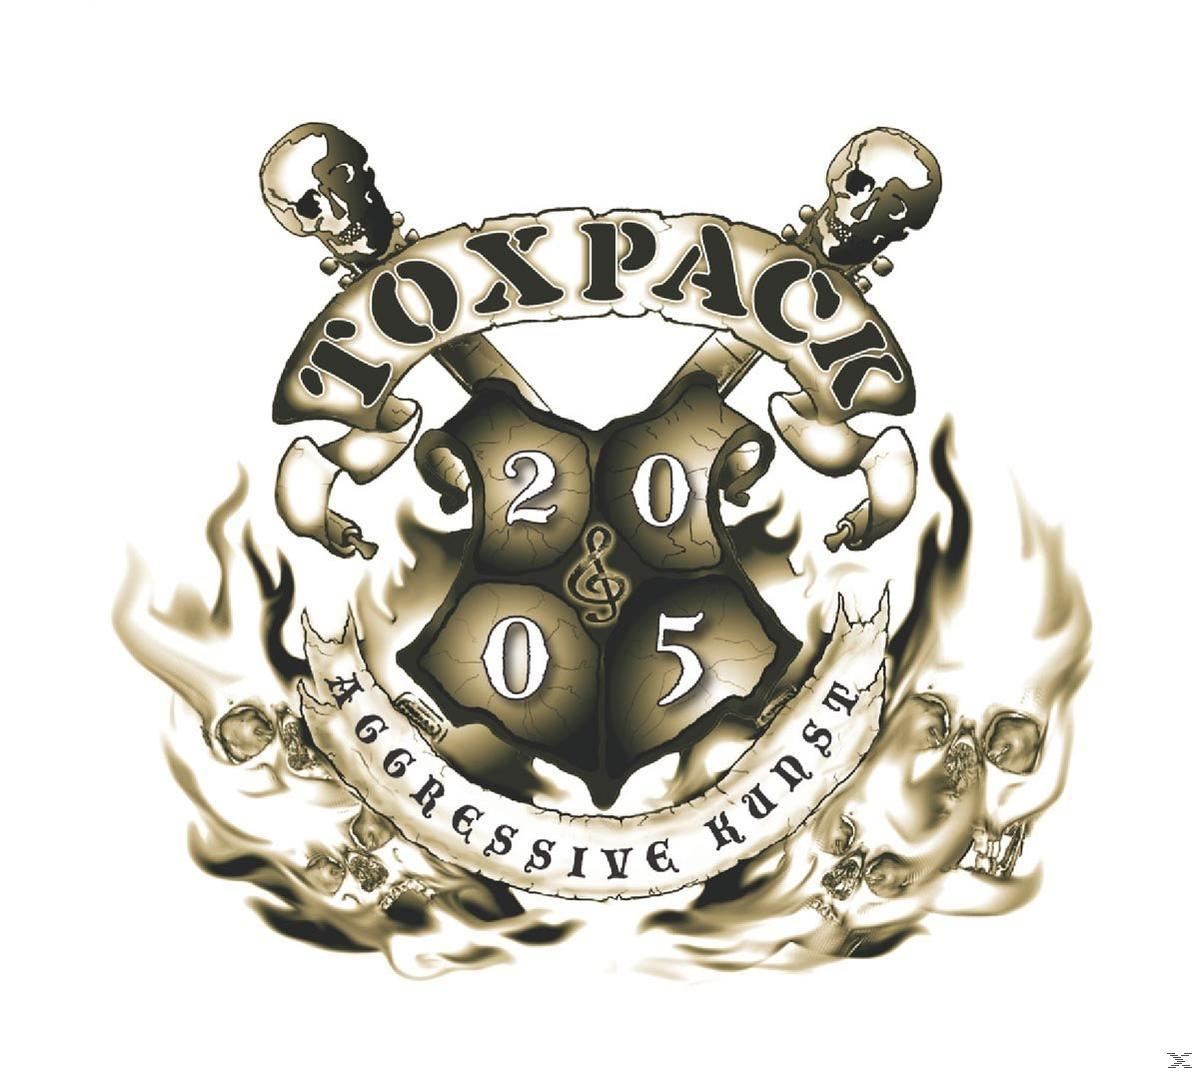 Toxpack - Aggressive Kunst - (CD)